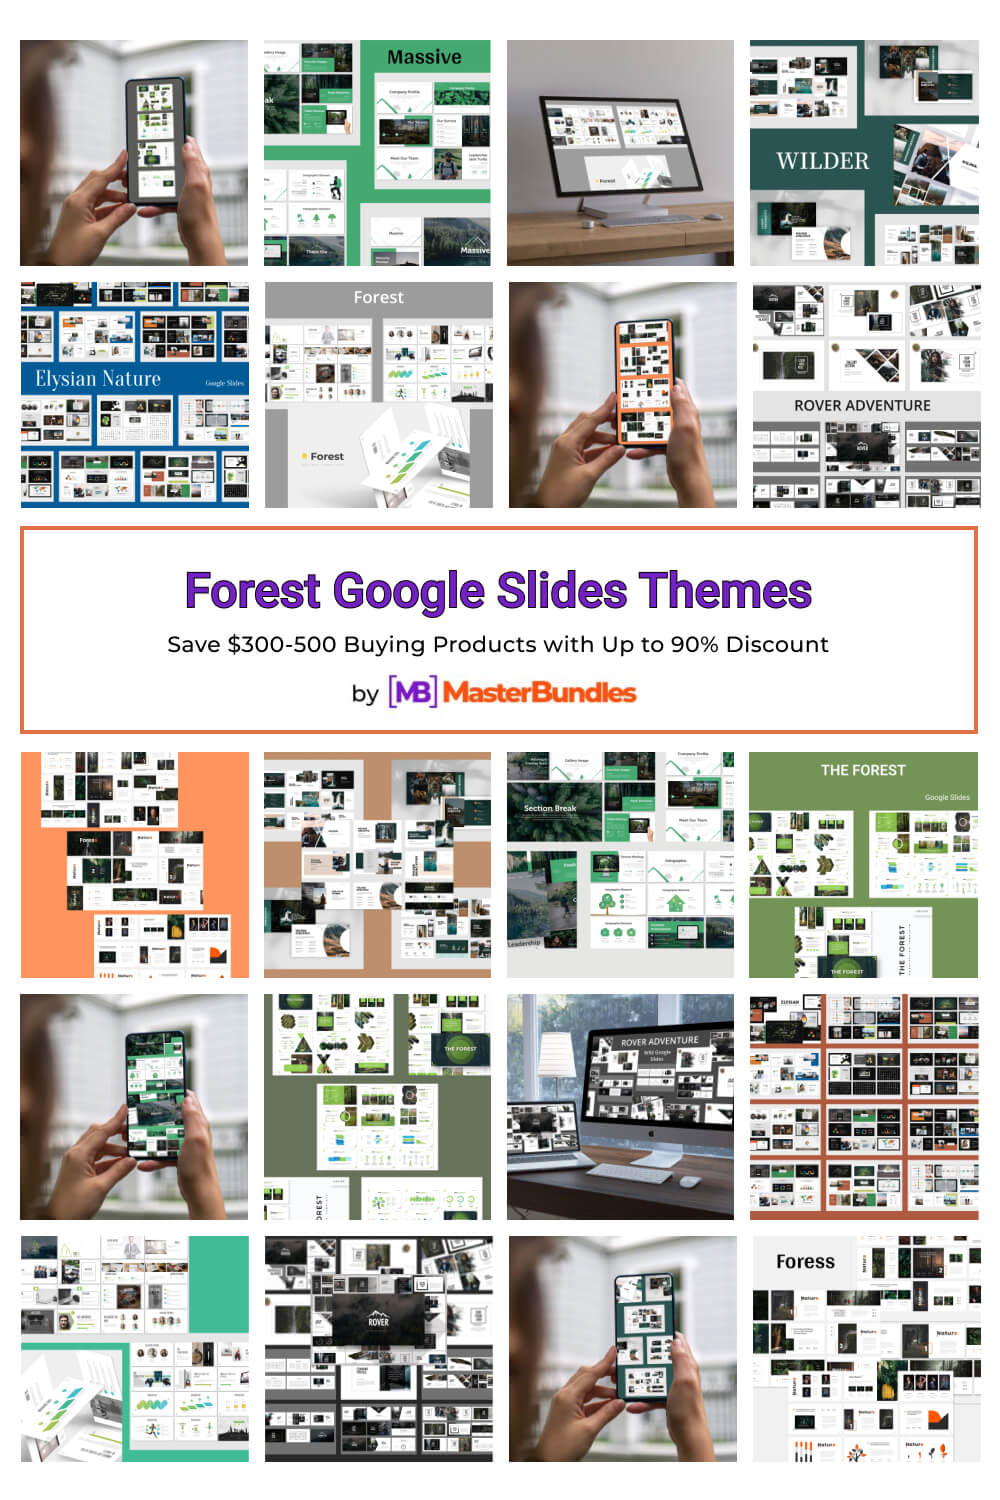 forest google slides themes pinterest image.